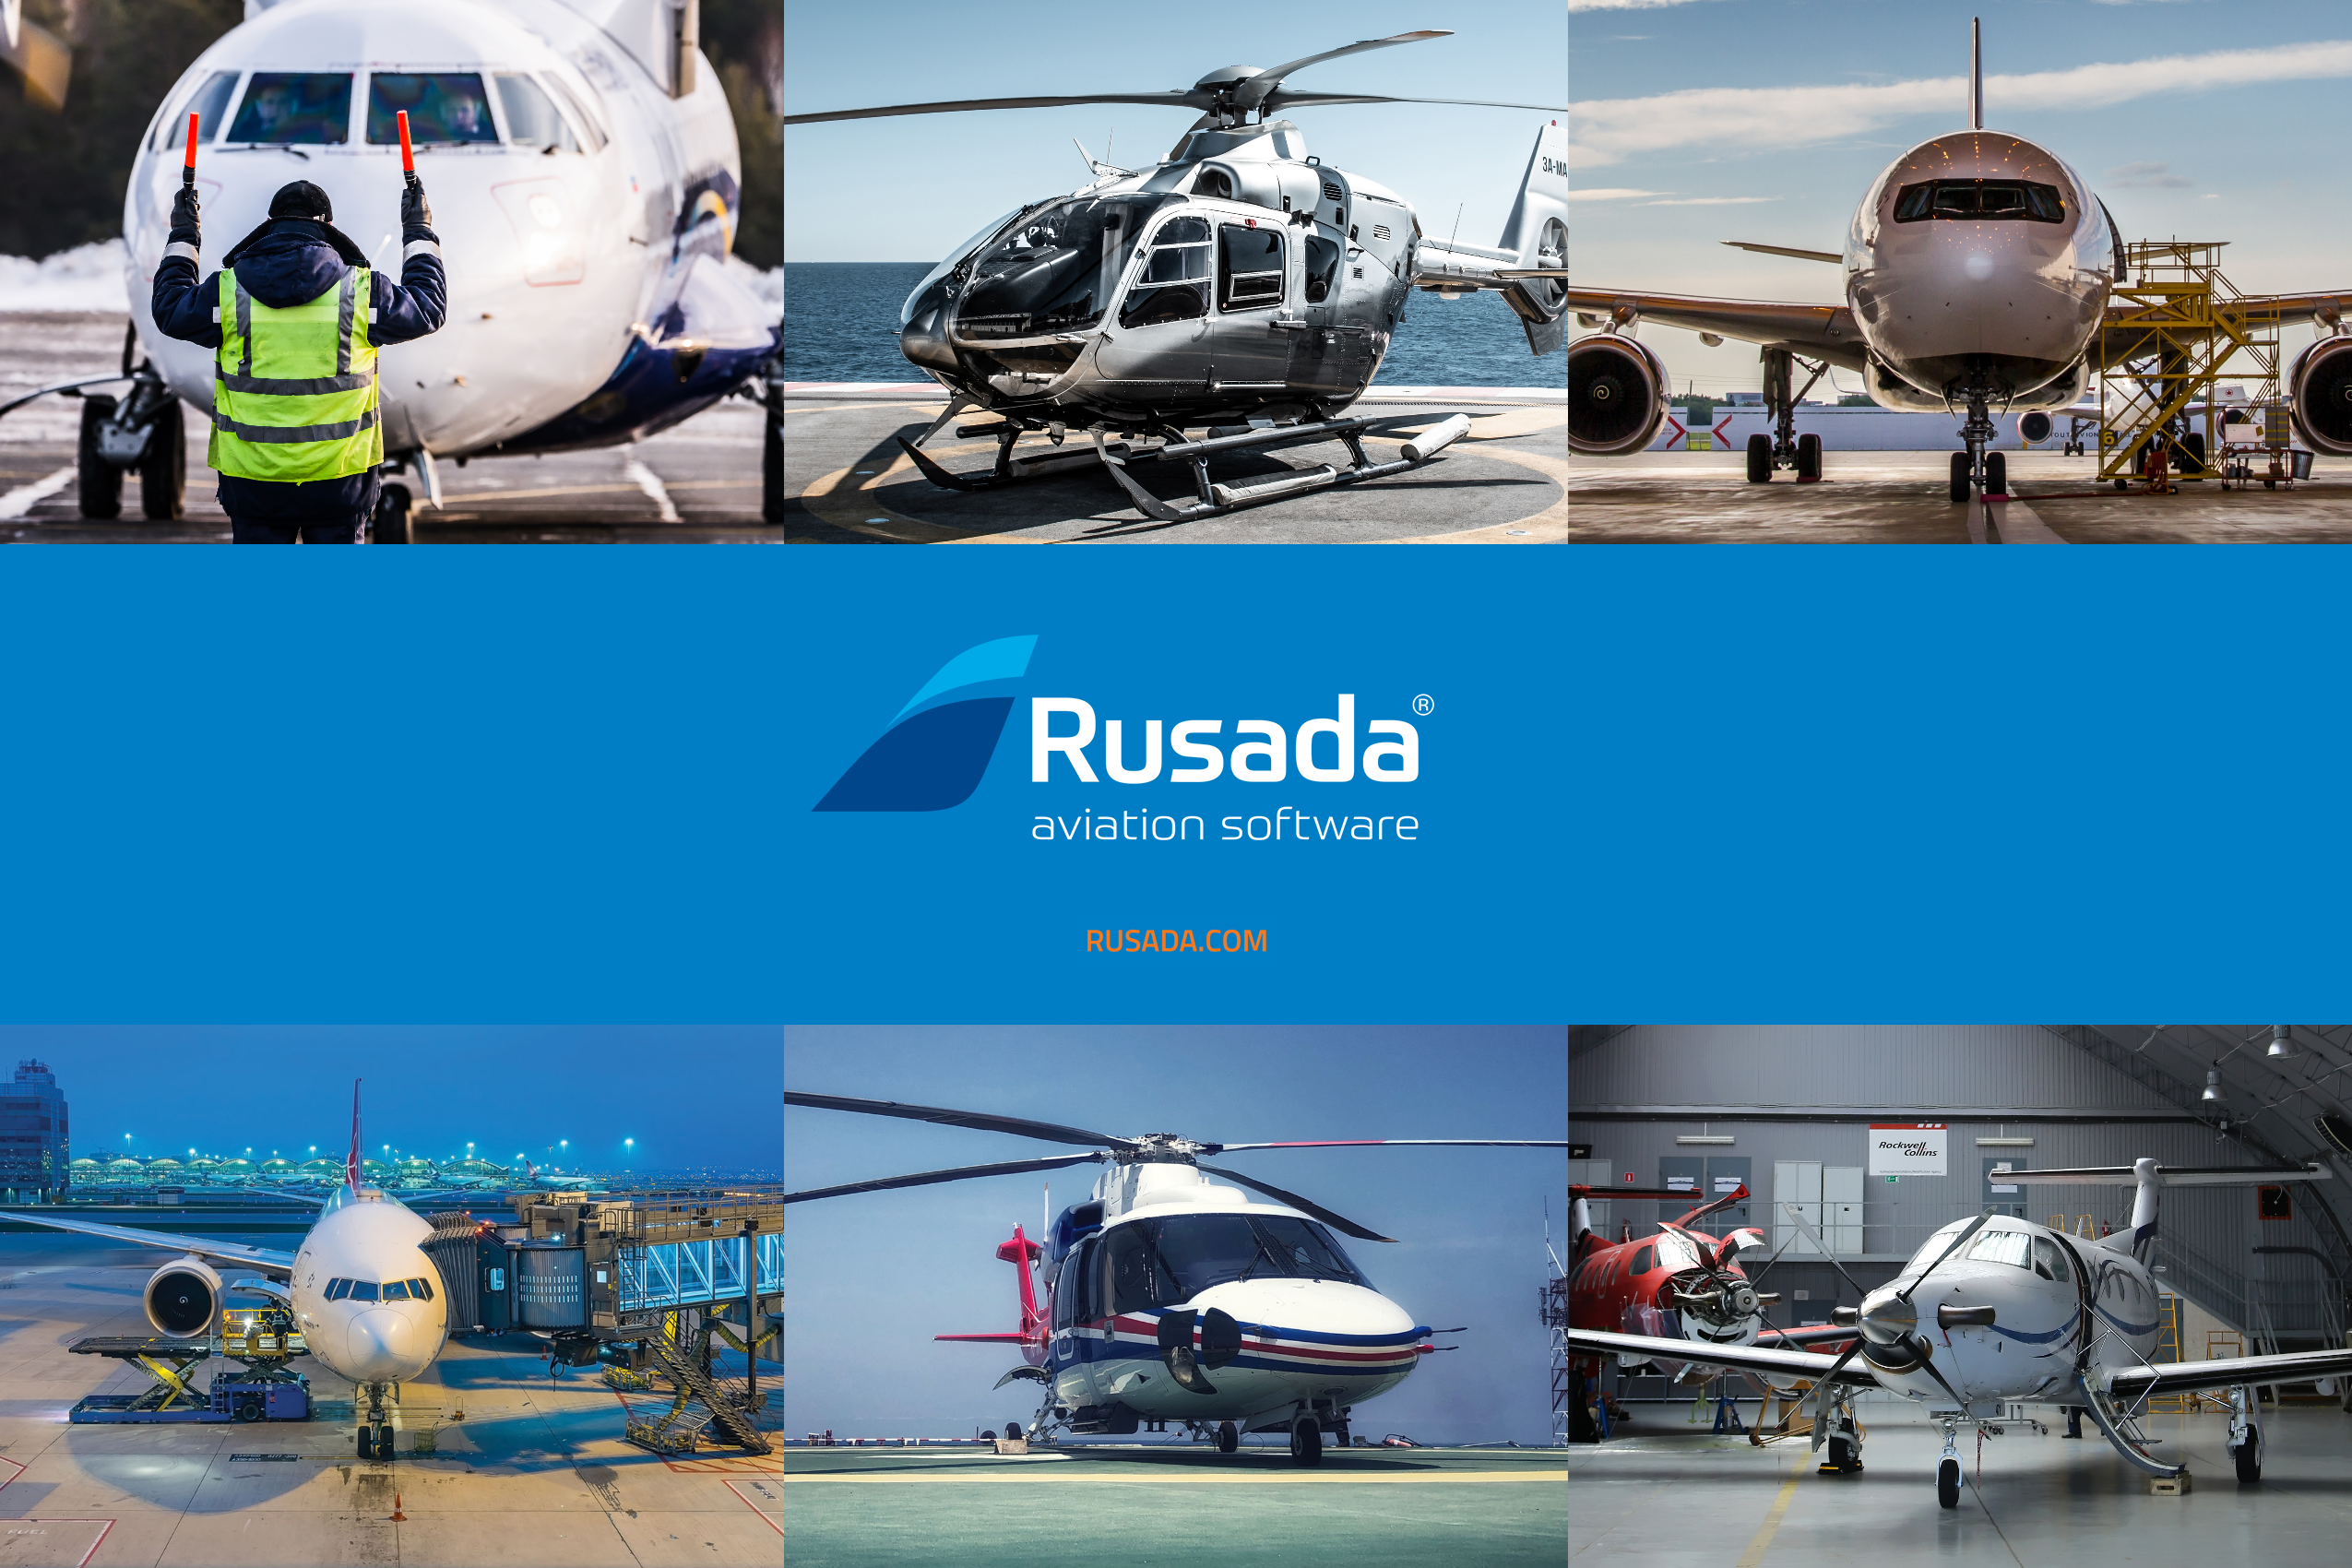 Rusada rebrands after successful two-year period